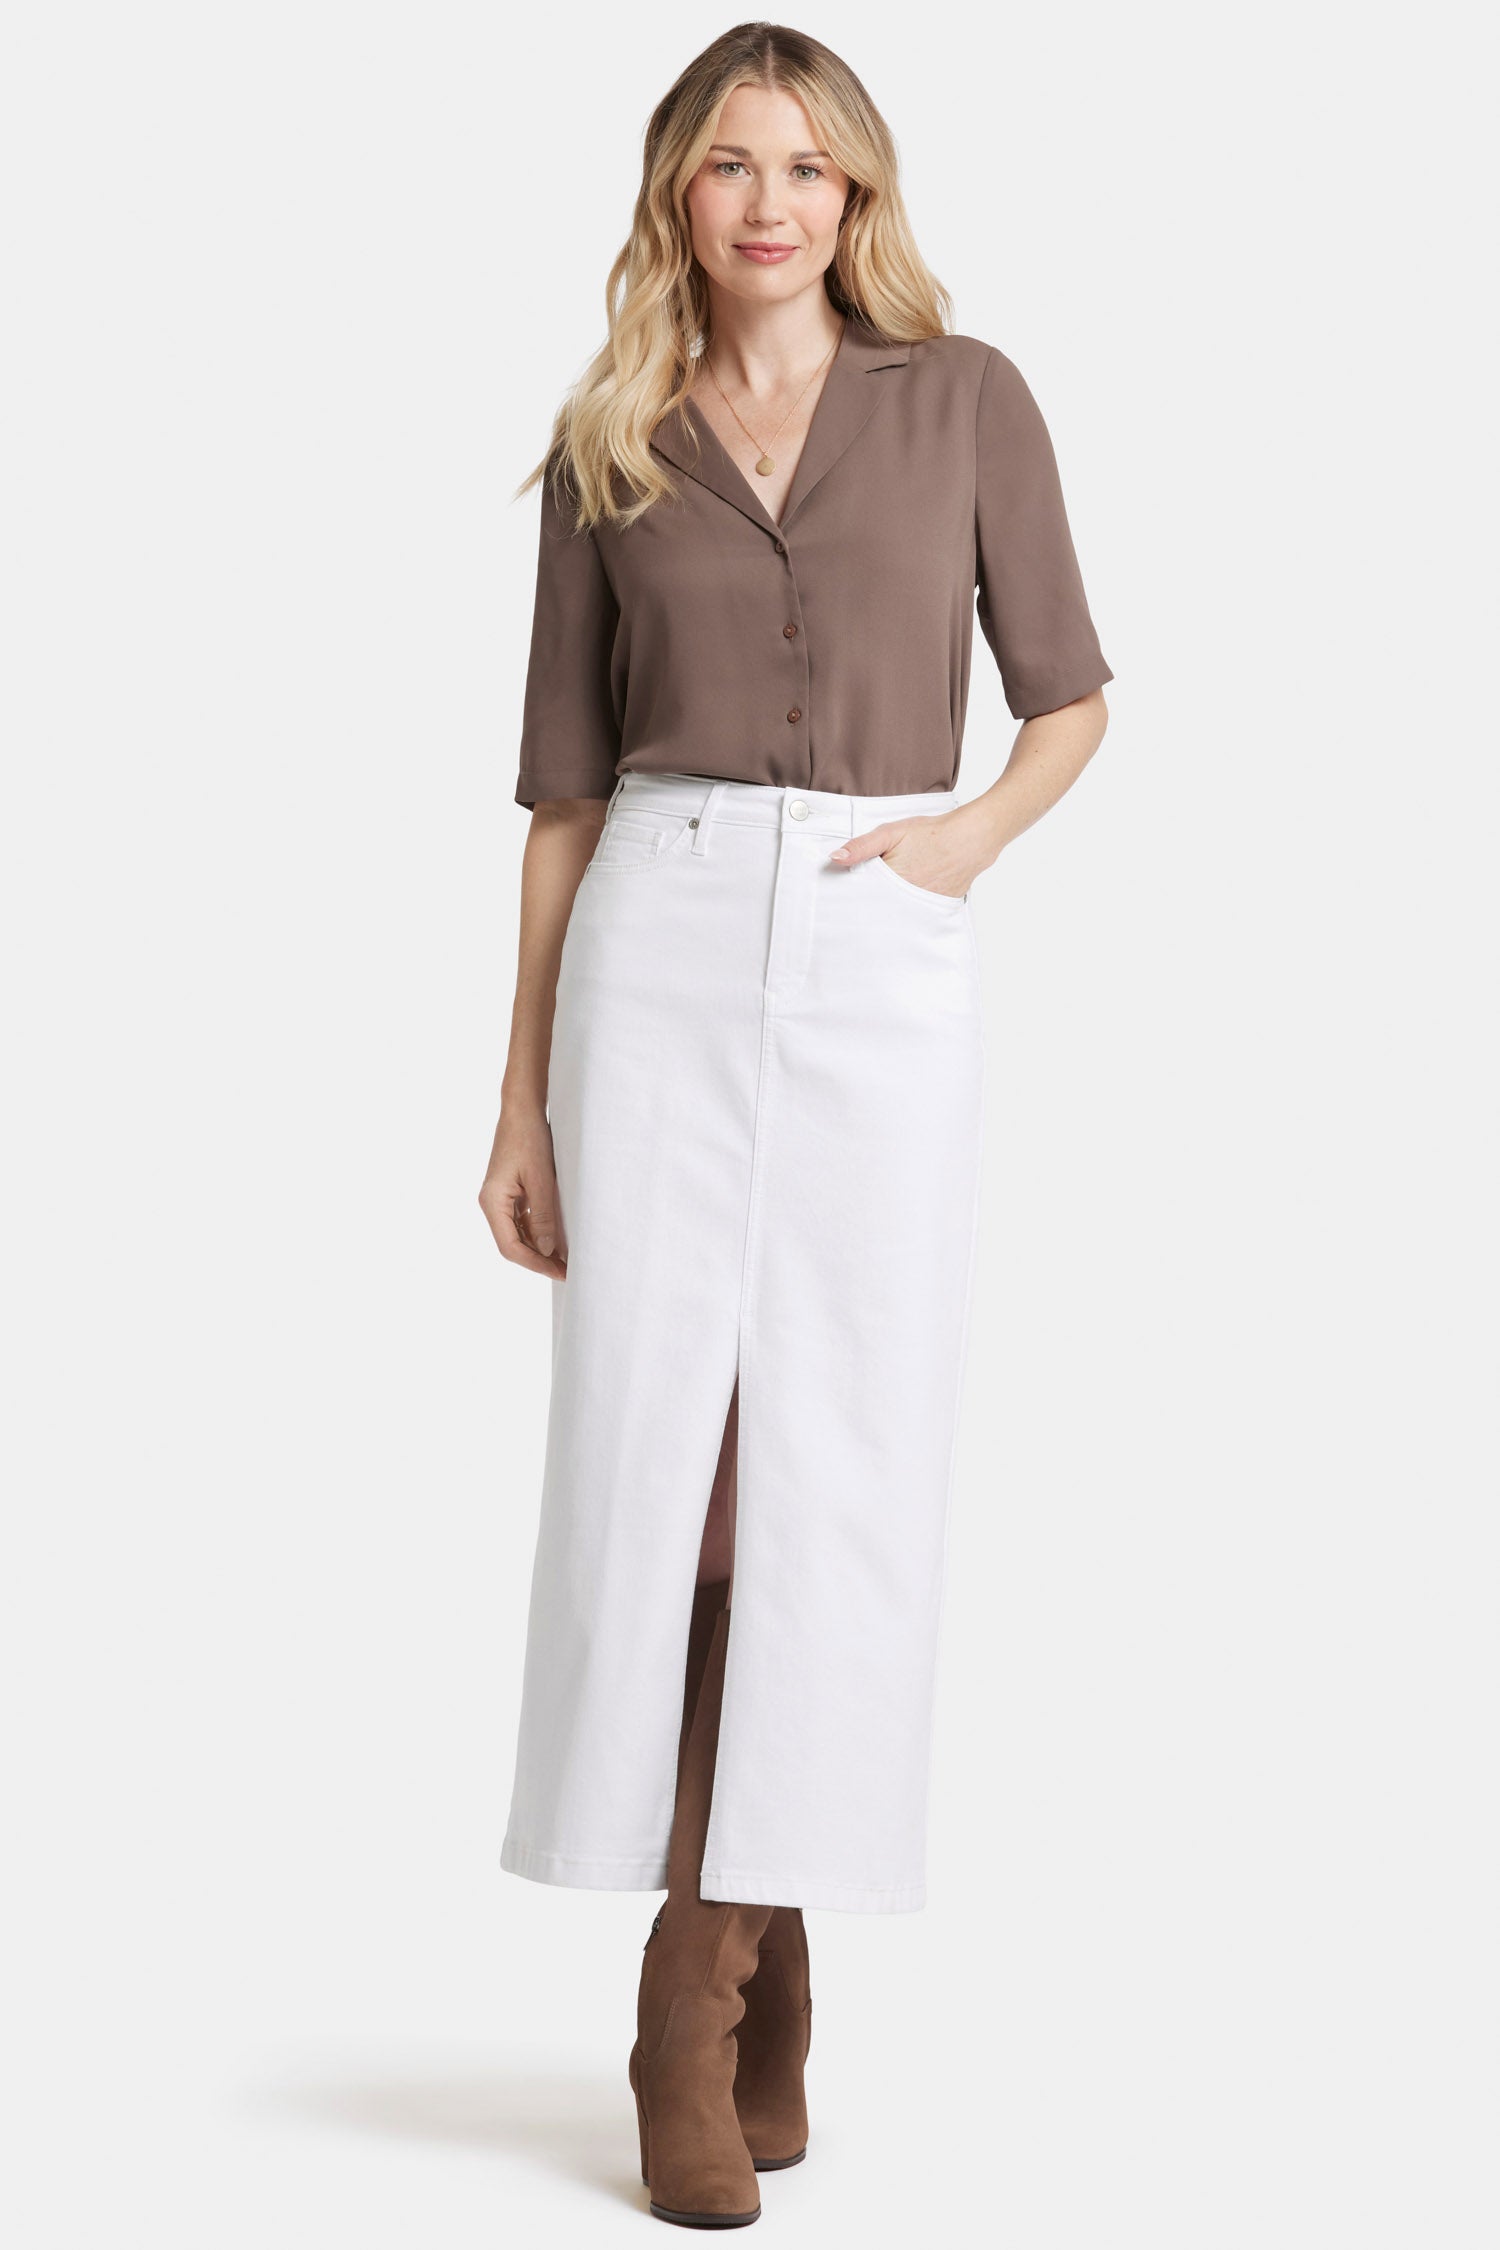 High Rise Long Skirt With Center Front Slit - Optic White White | NYDJ